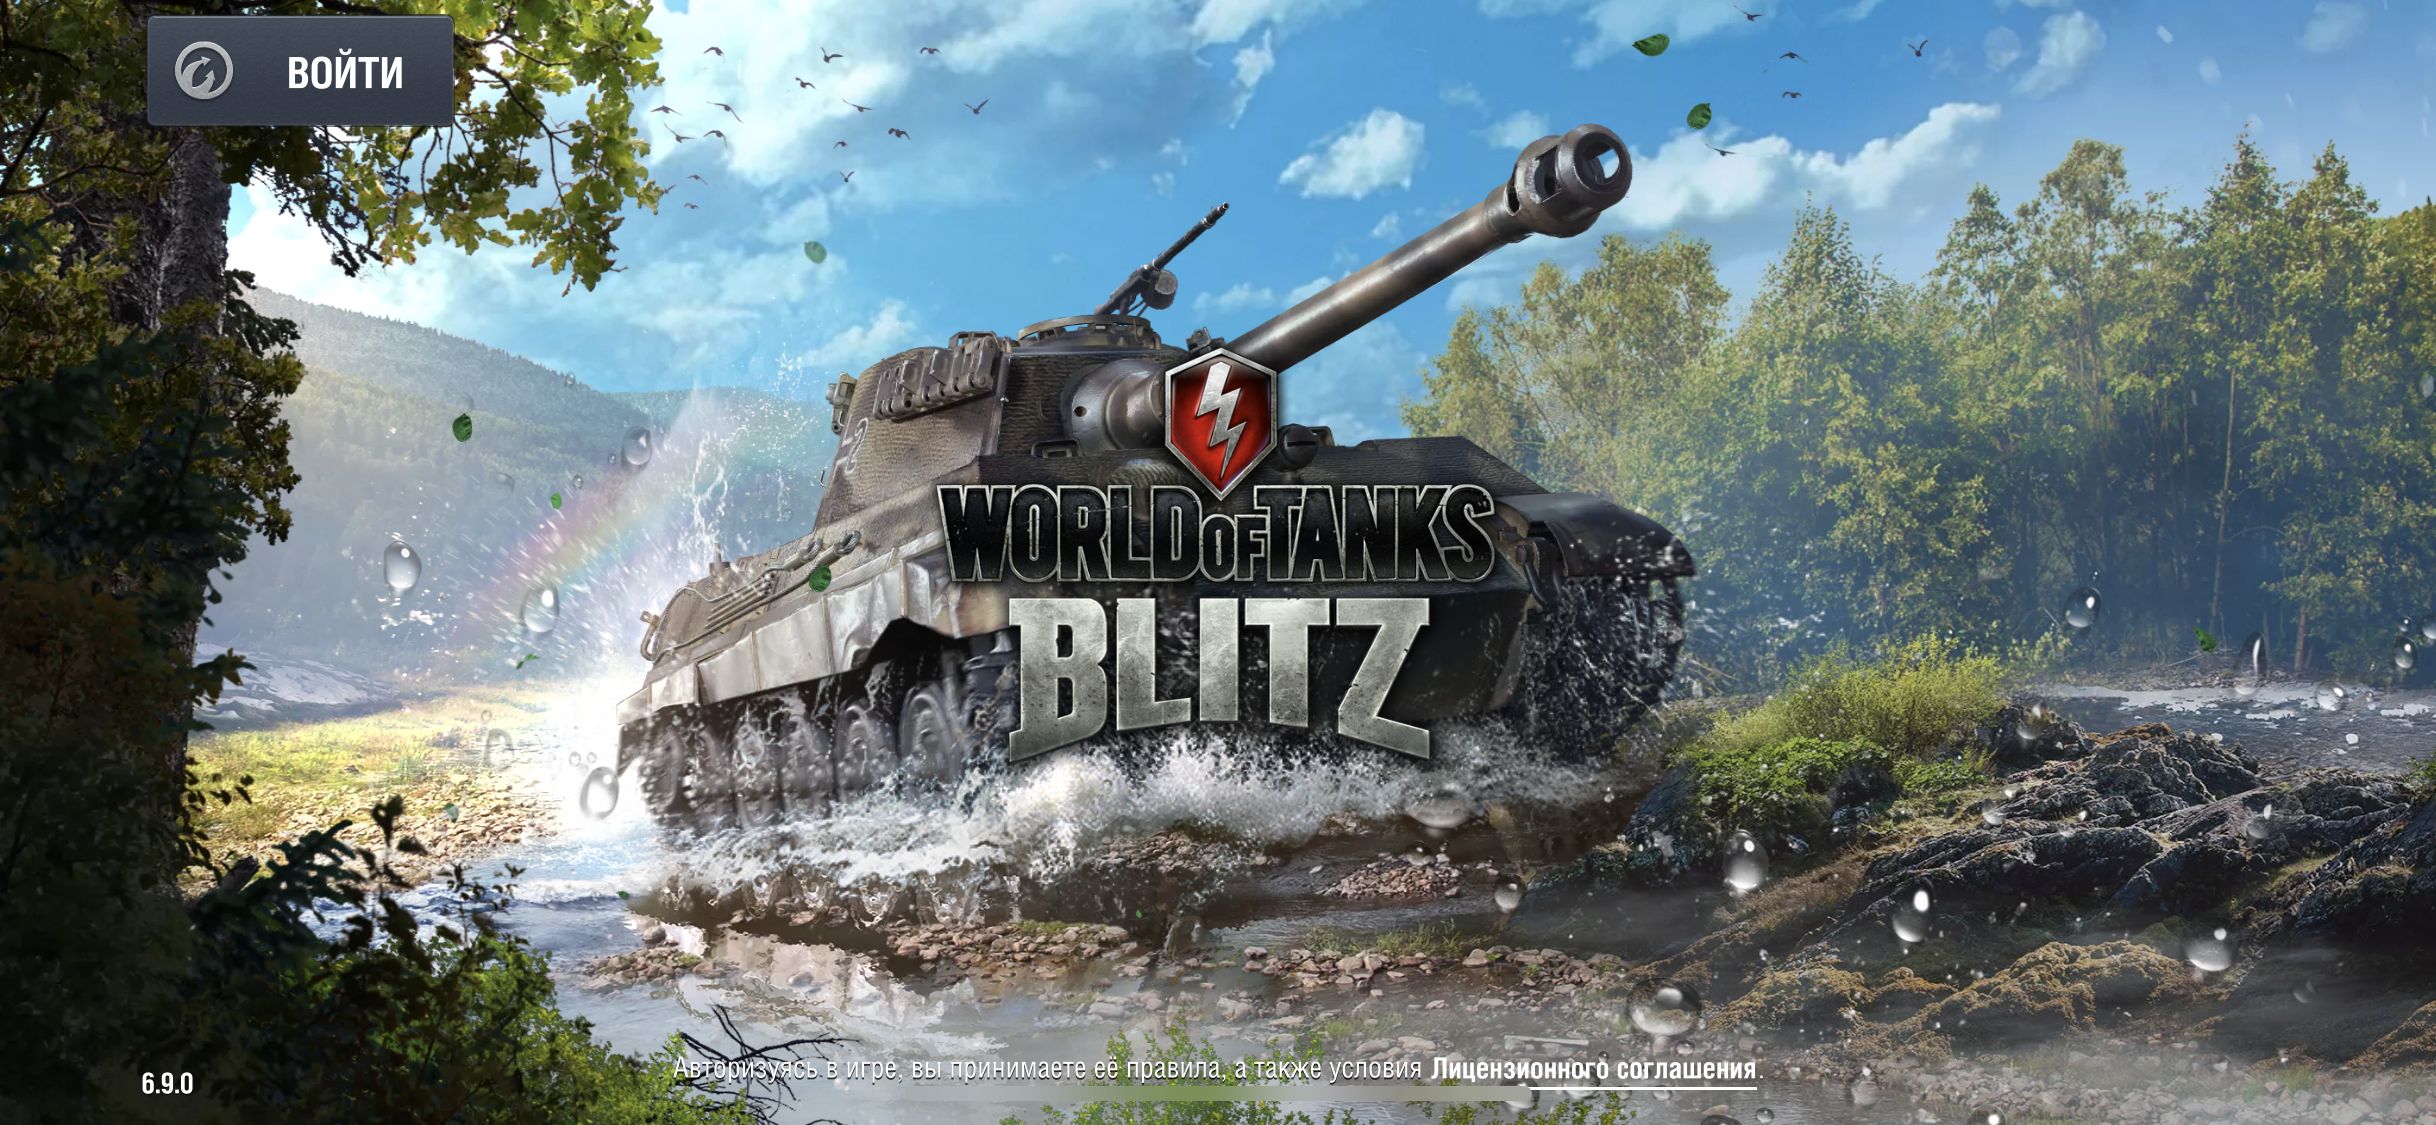 World of Tanks Blitz для Android скачать бесплатно Softolib